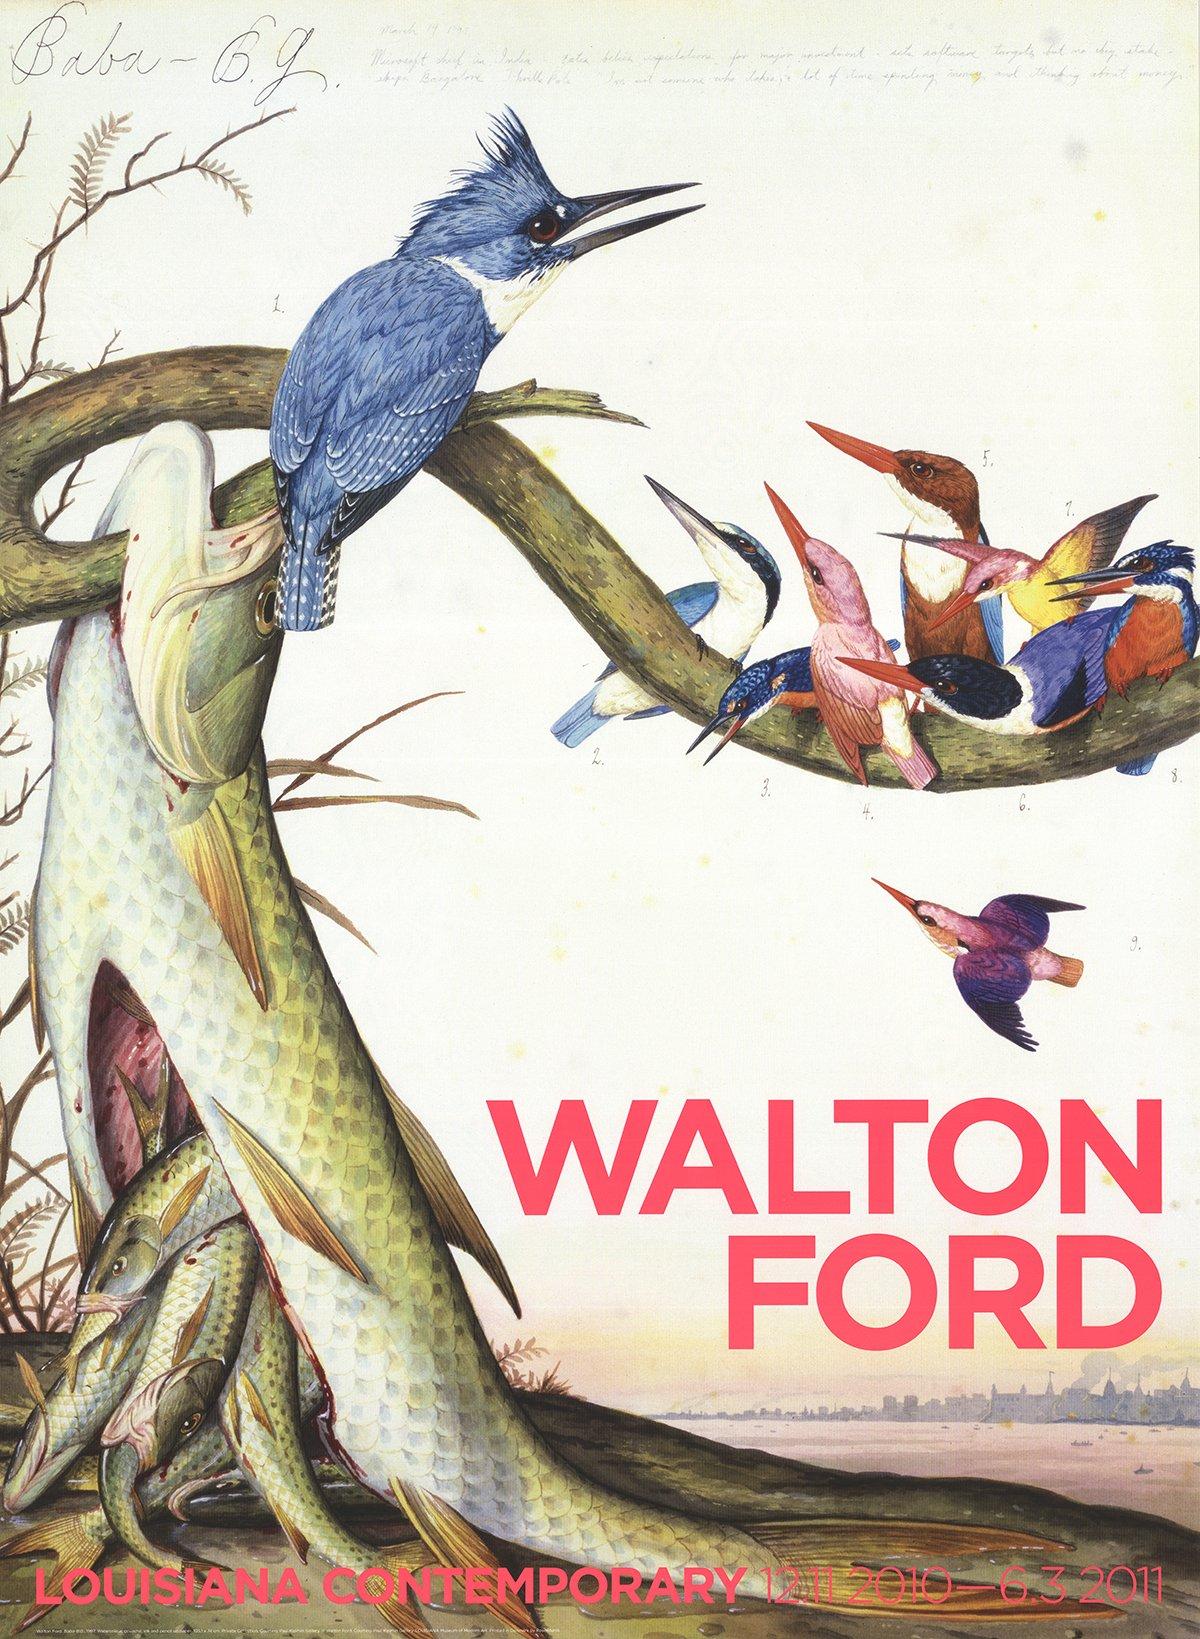 Walton Ford 'Baba' -2010 - Offset Lithograph